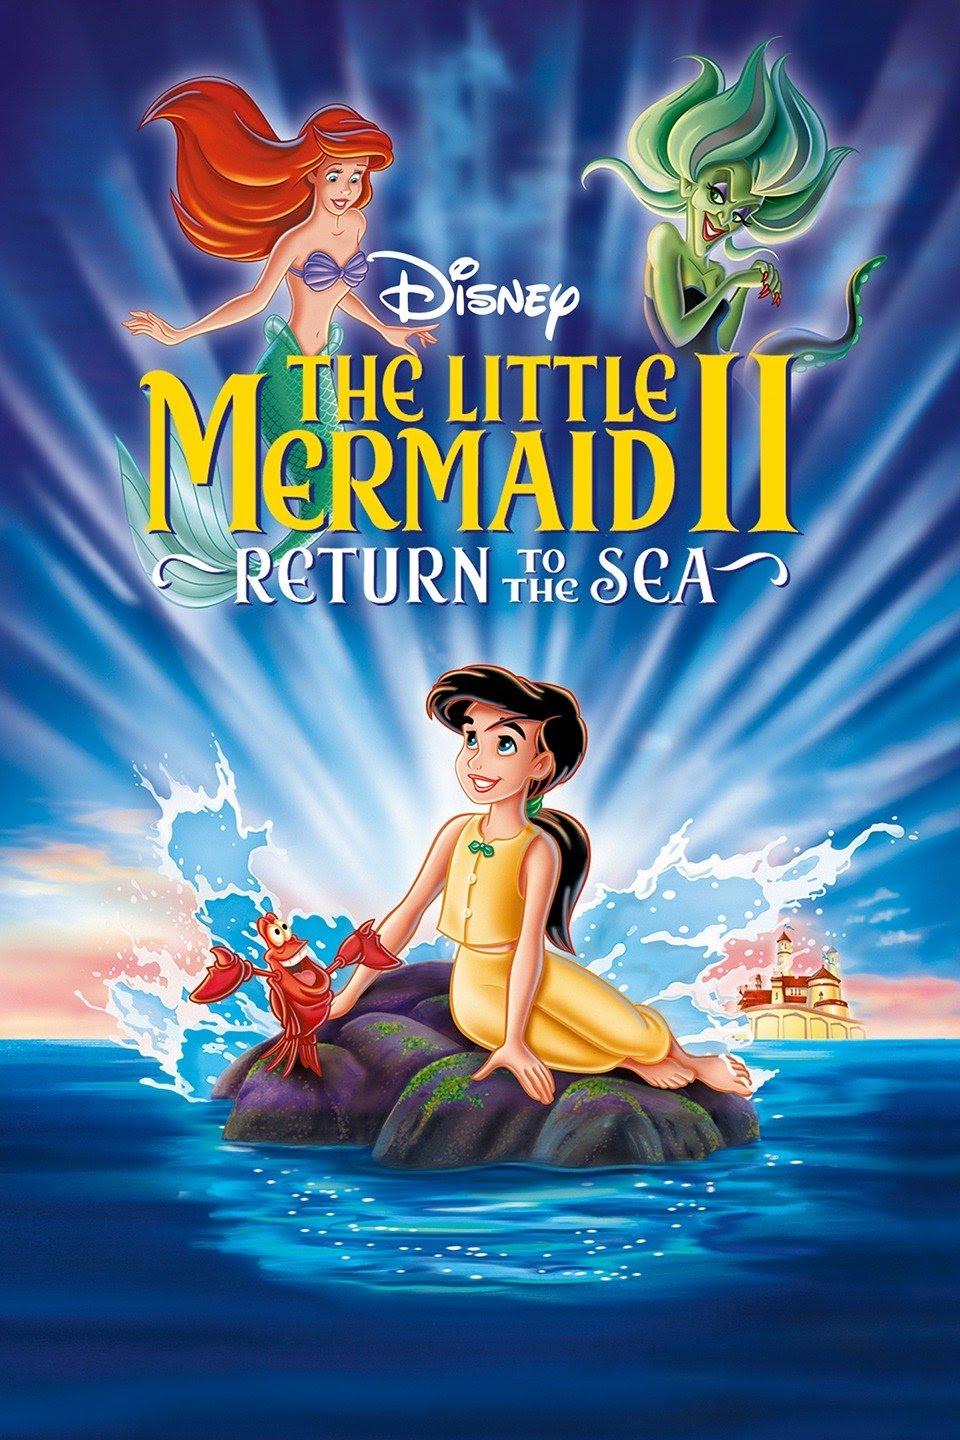 The Little Mermaid 2: Return to the Sea (2000) - Animation